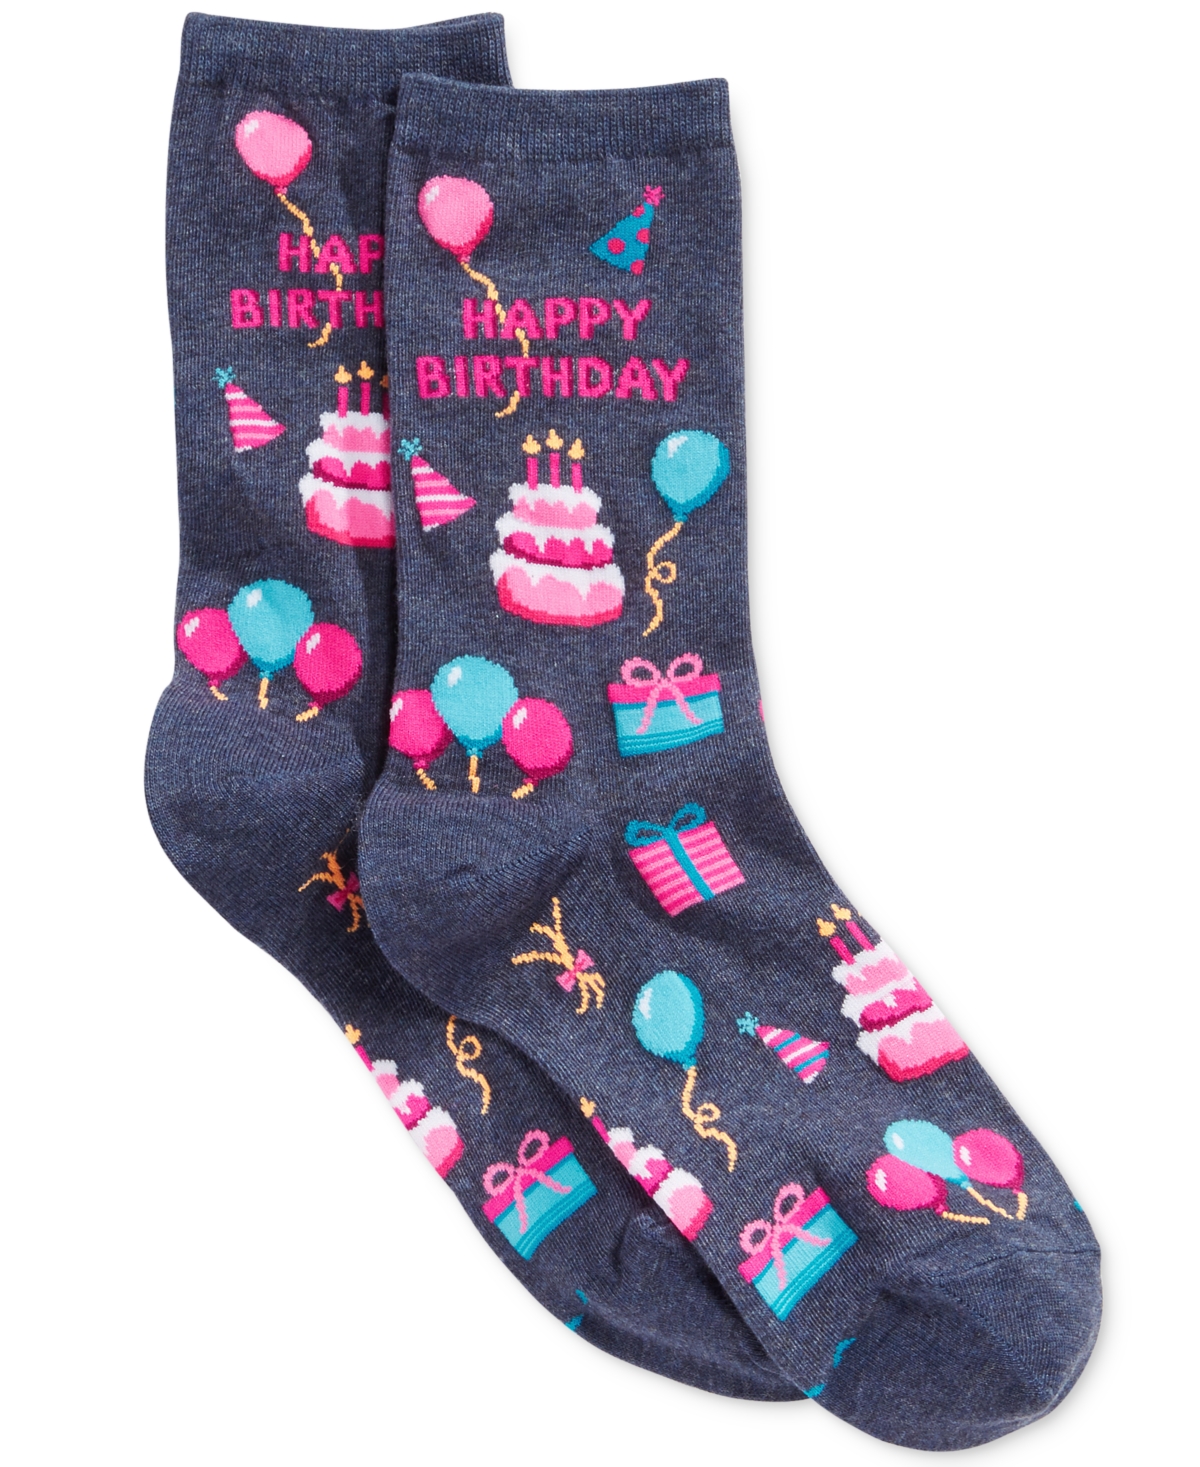 Women's Happy Birthday Fashion Crew Socks - Denim Heather